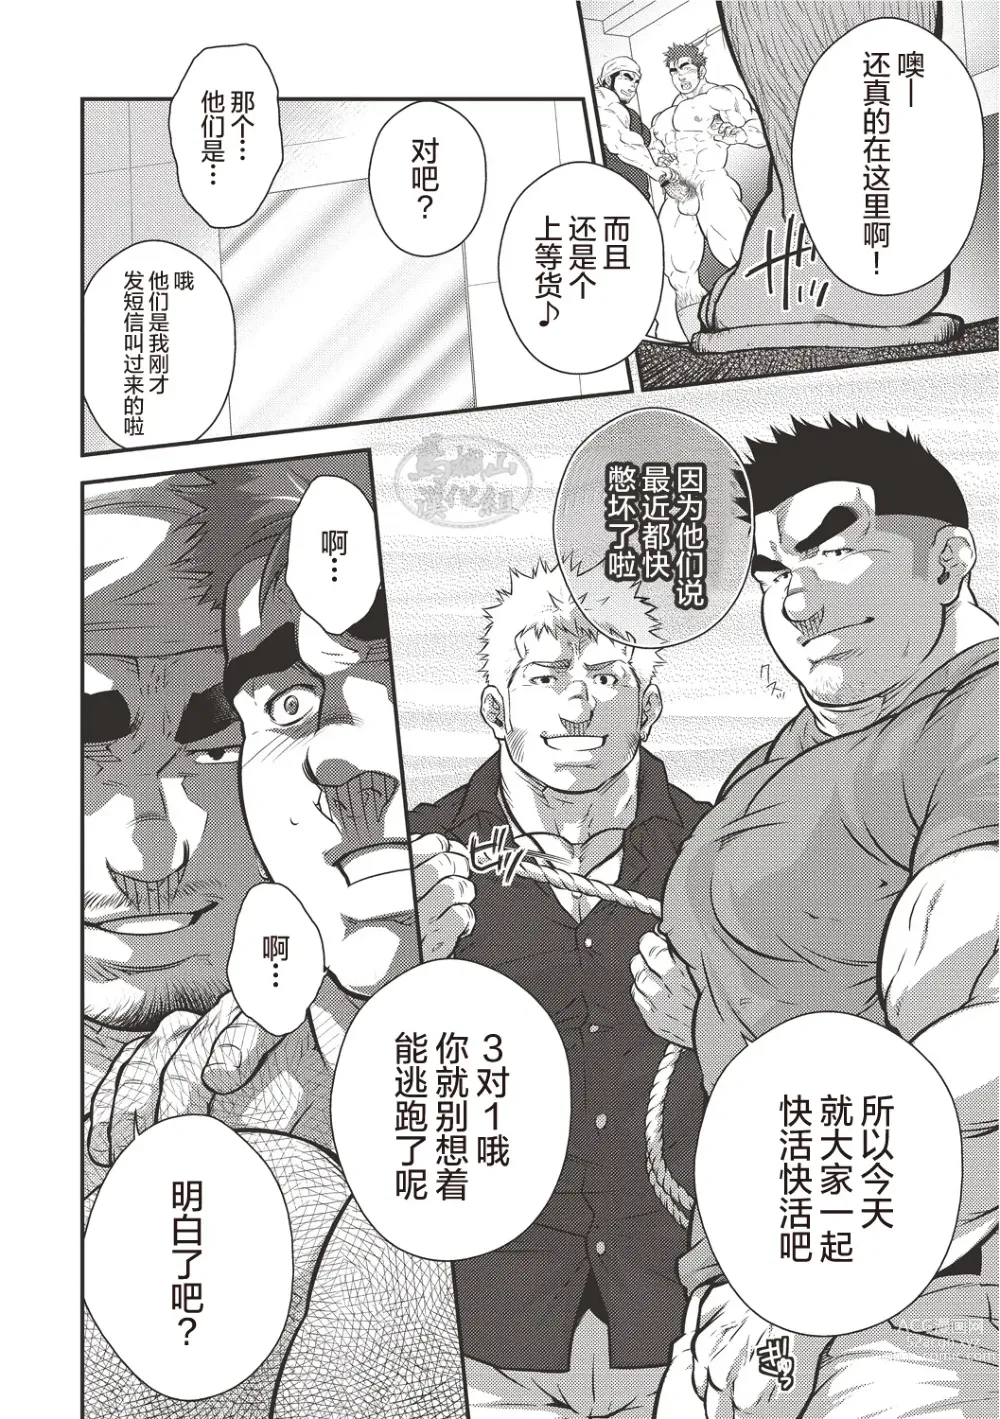 Page 7 of manga  激情男児!! 06 自恋的已婚肌肉男在公园里打飞机的话 / 梦中捆绑